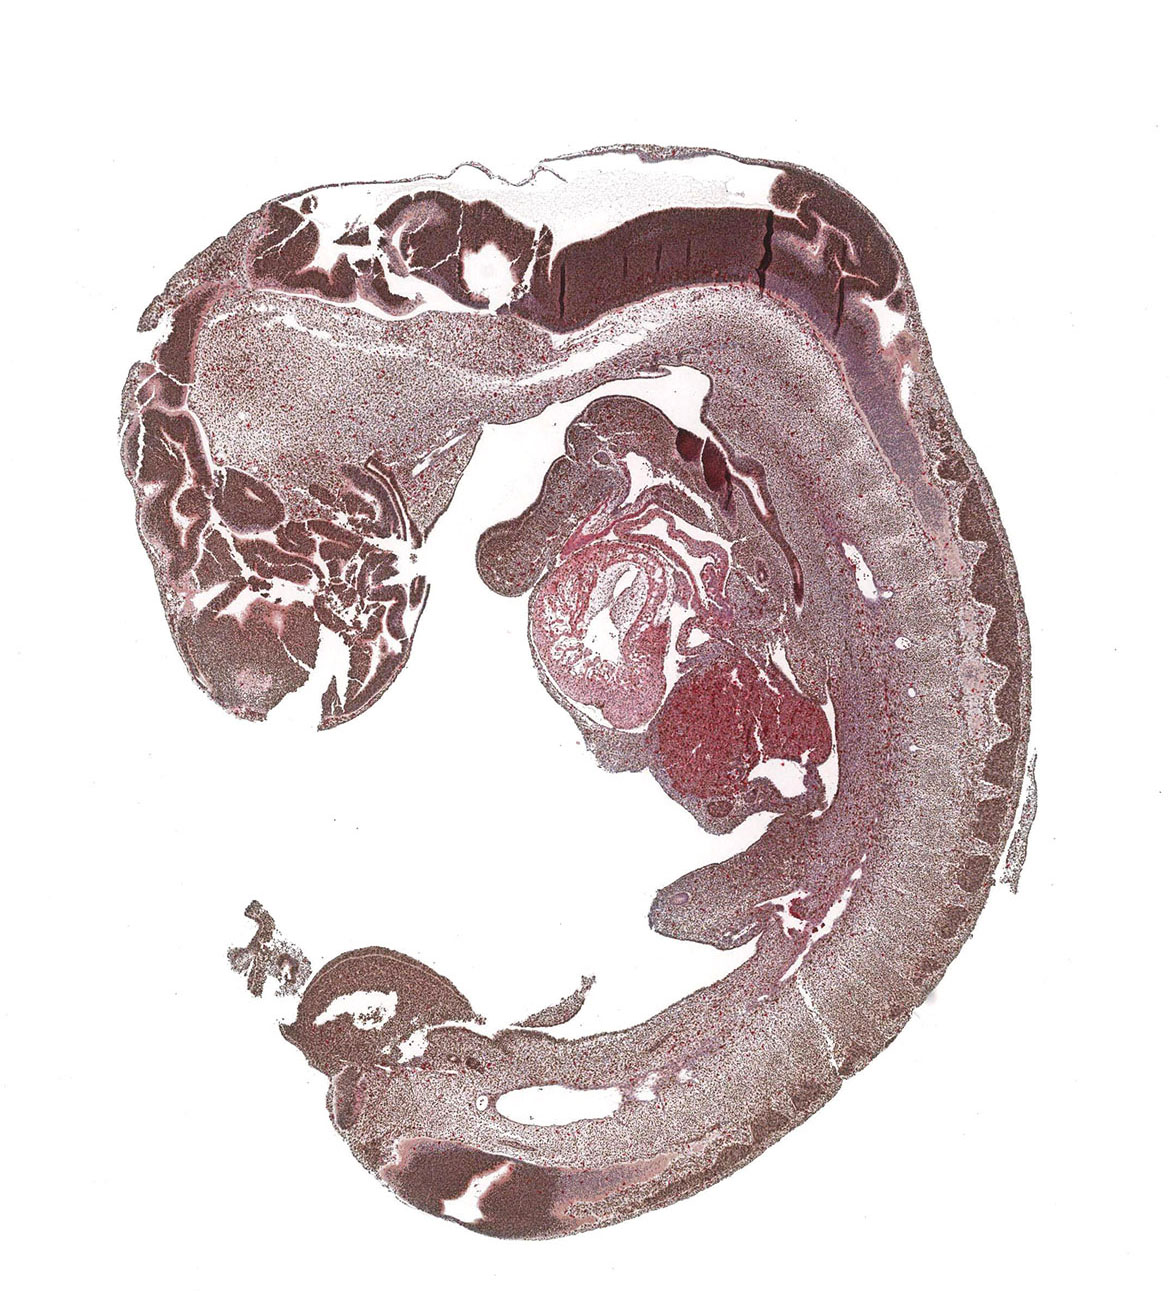 CS12 Human embryo